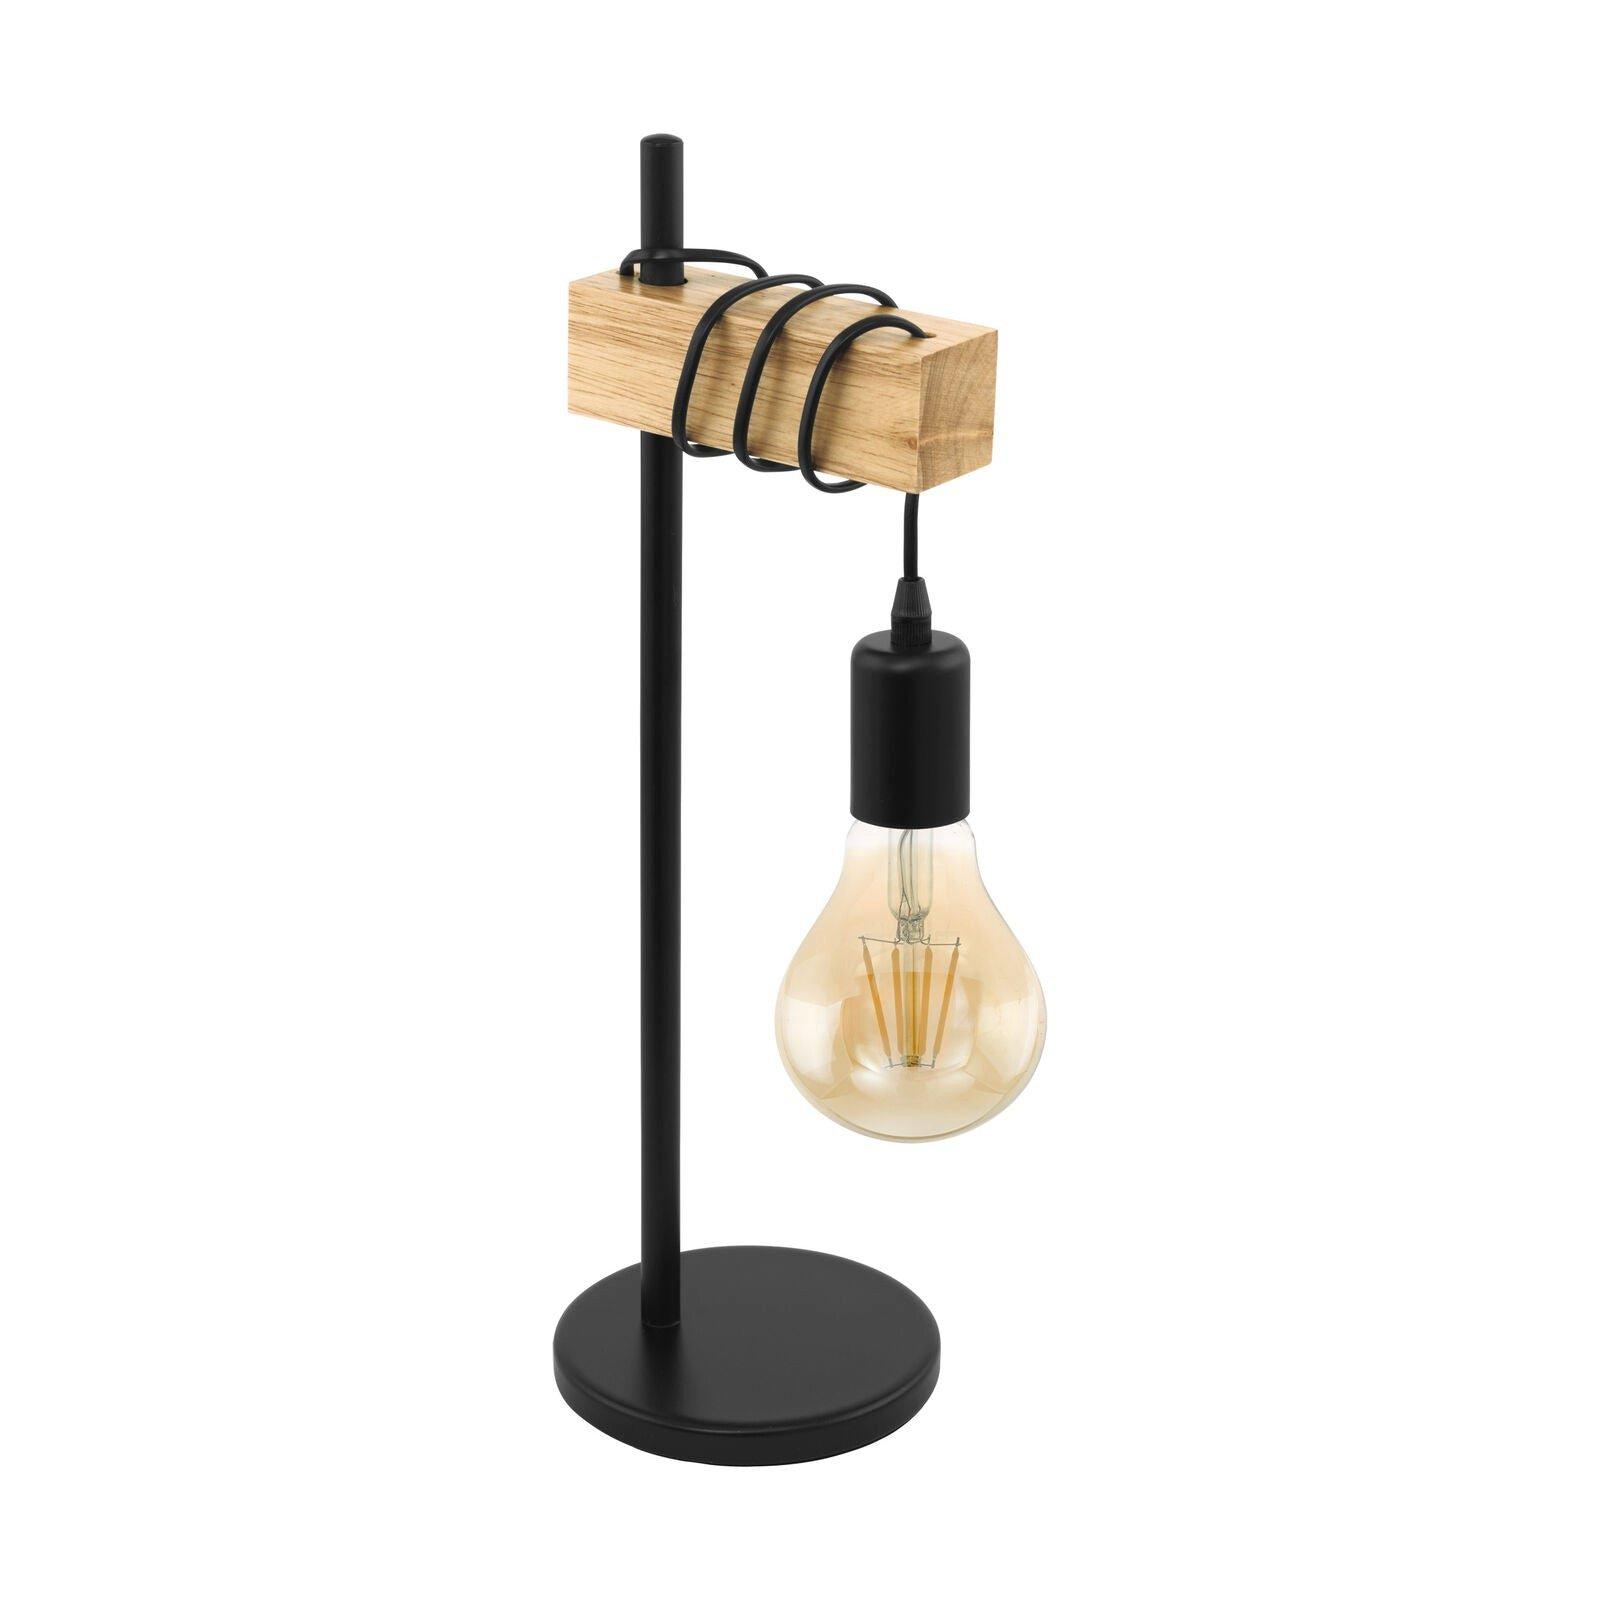 Table Lamp Desk Hangman Light Black Steel & Wood Arm 1 x 10W E27 Bulb